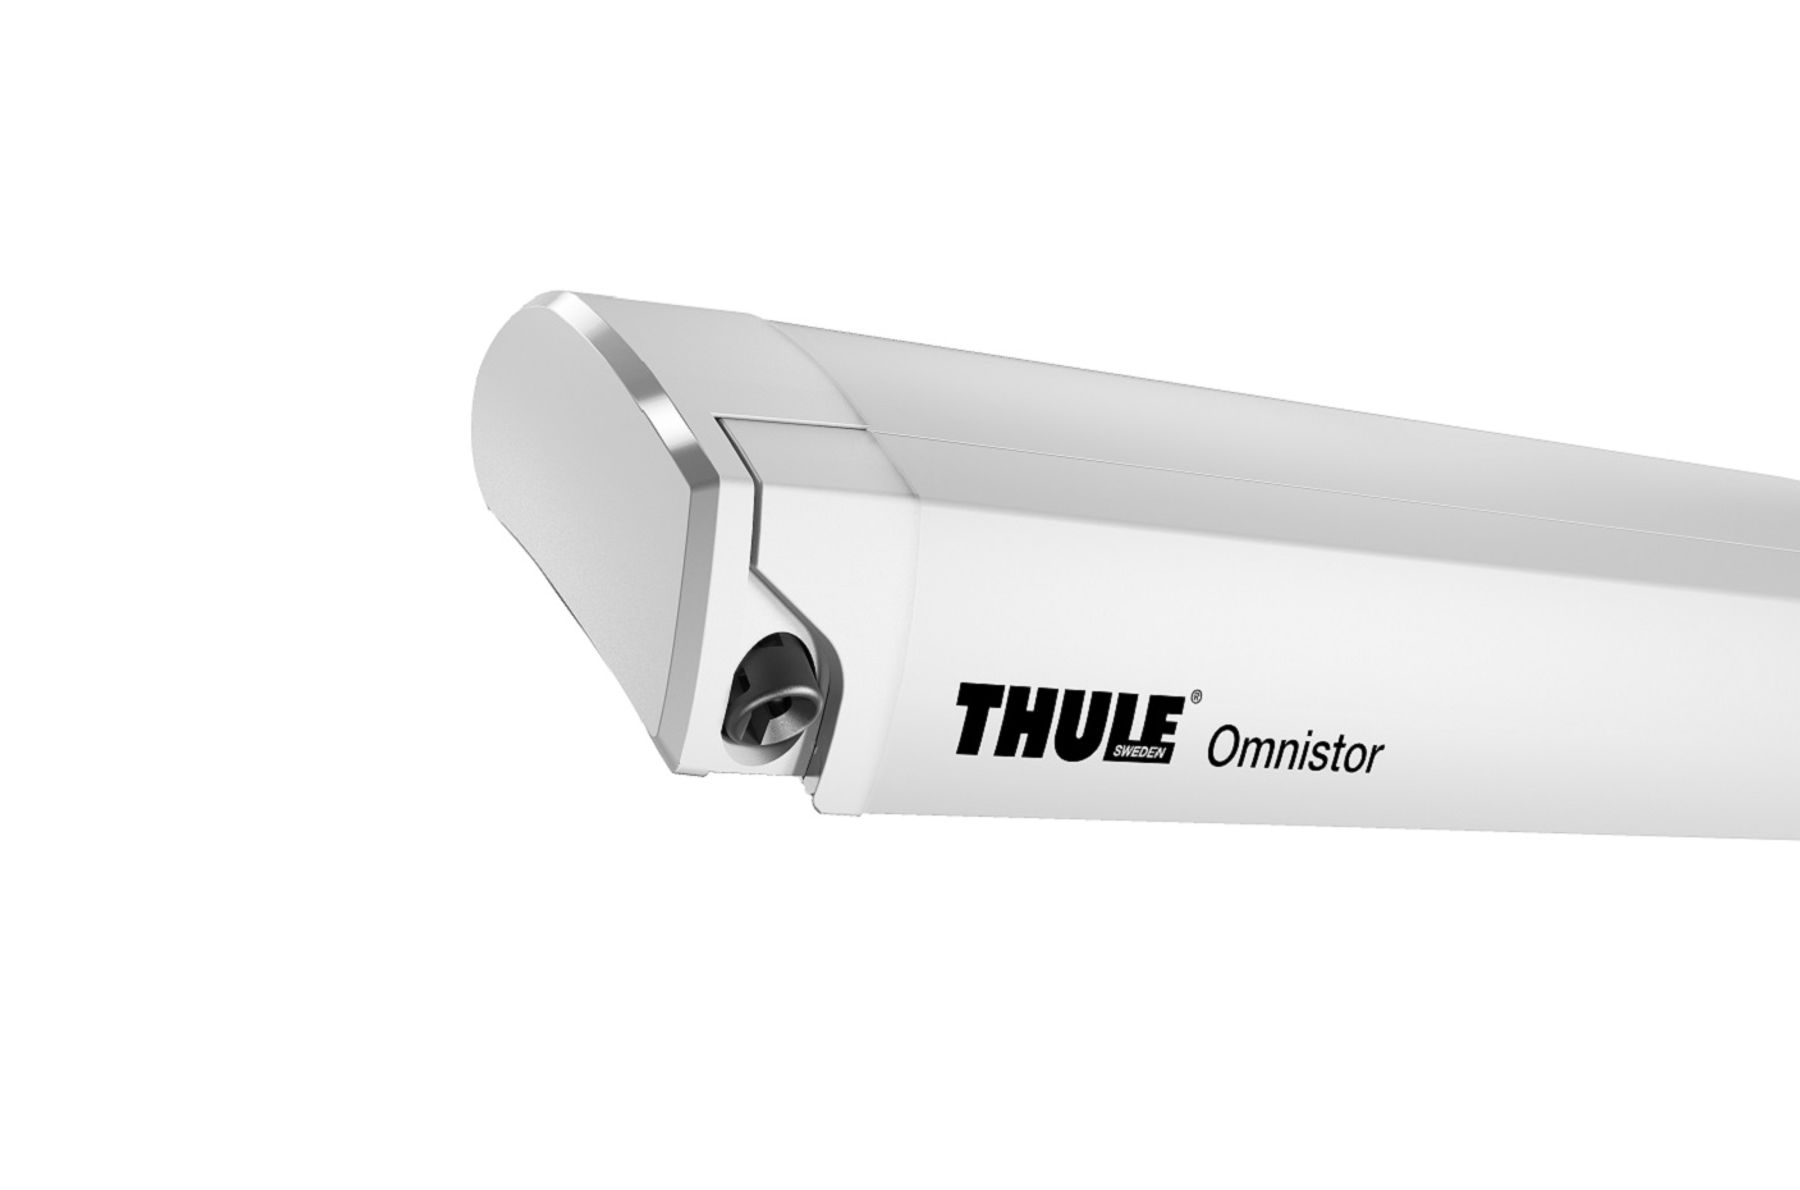 Thule omnistor 9200 awning caravan motorhome roof mounted cassette white